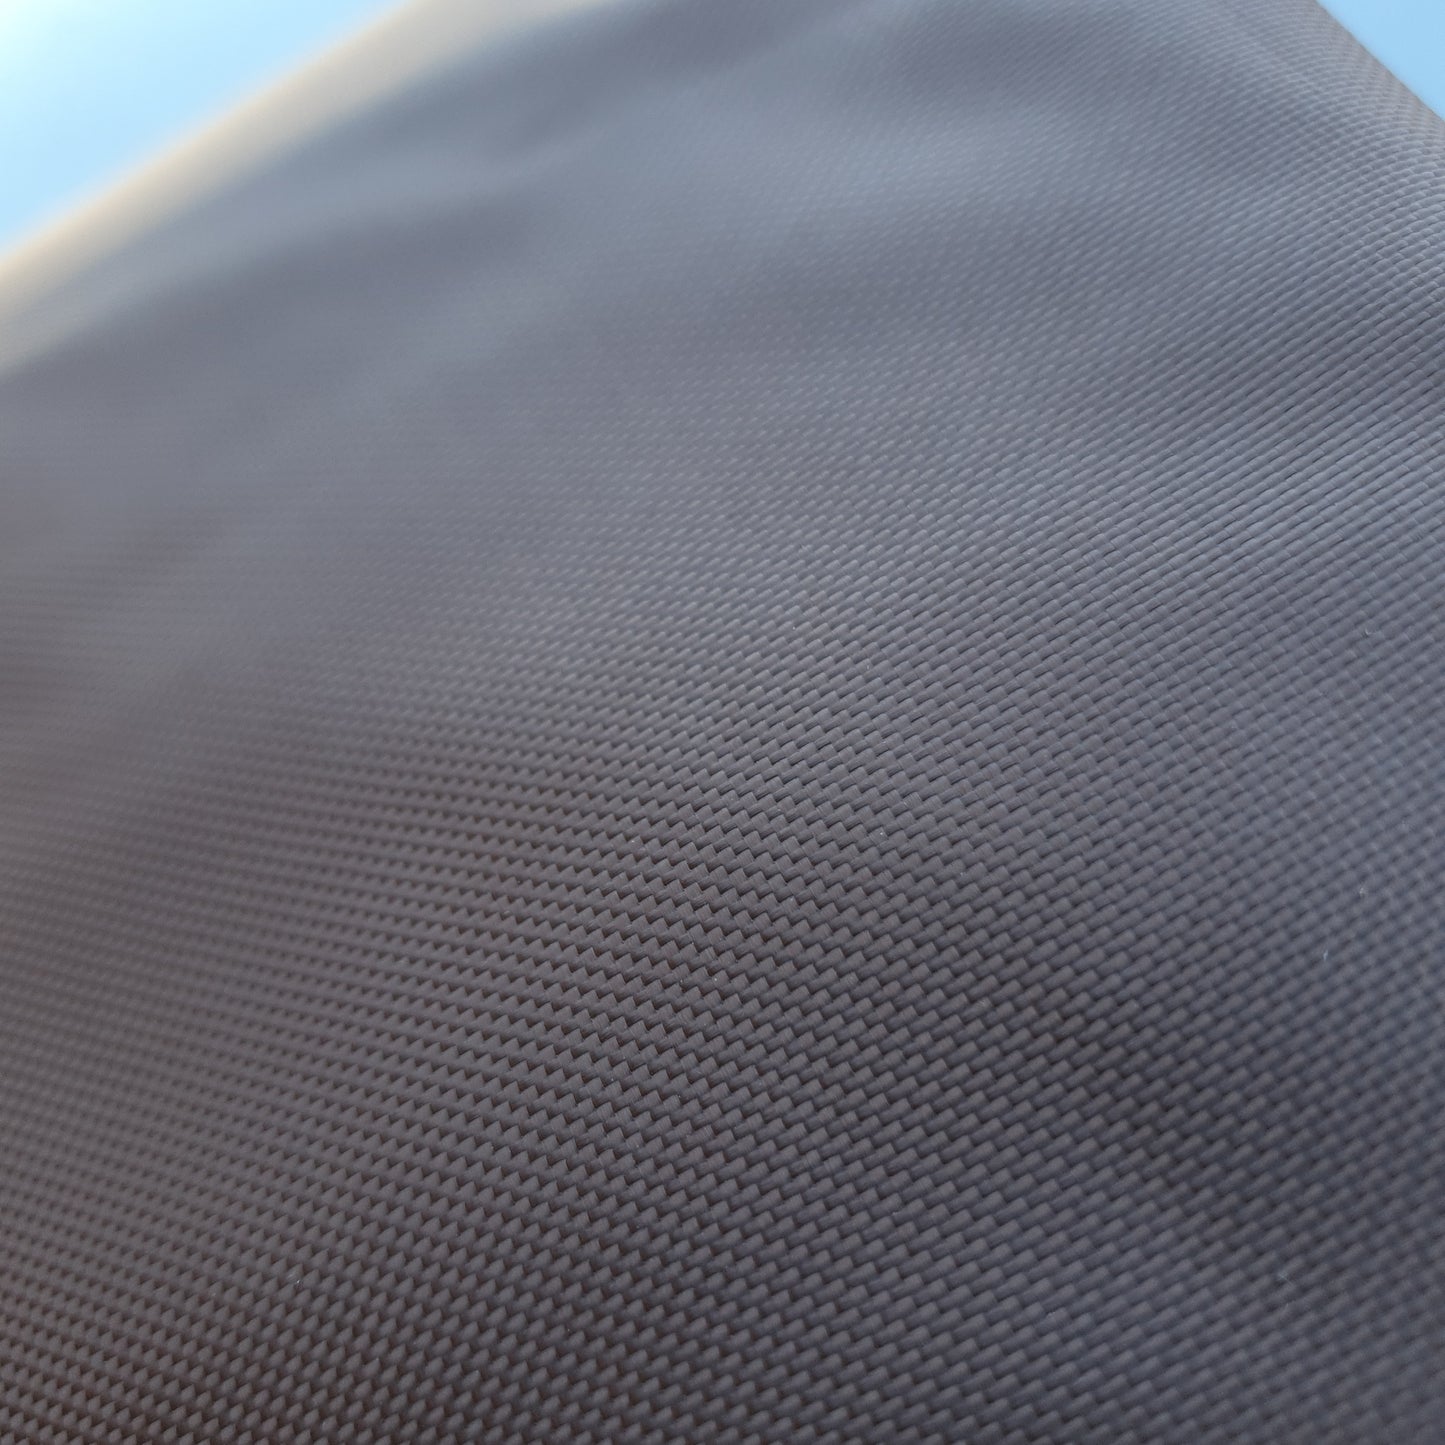 Waterproof Dog Bed Black Fabric Close Up